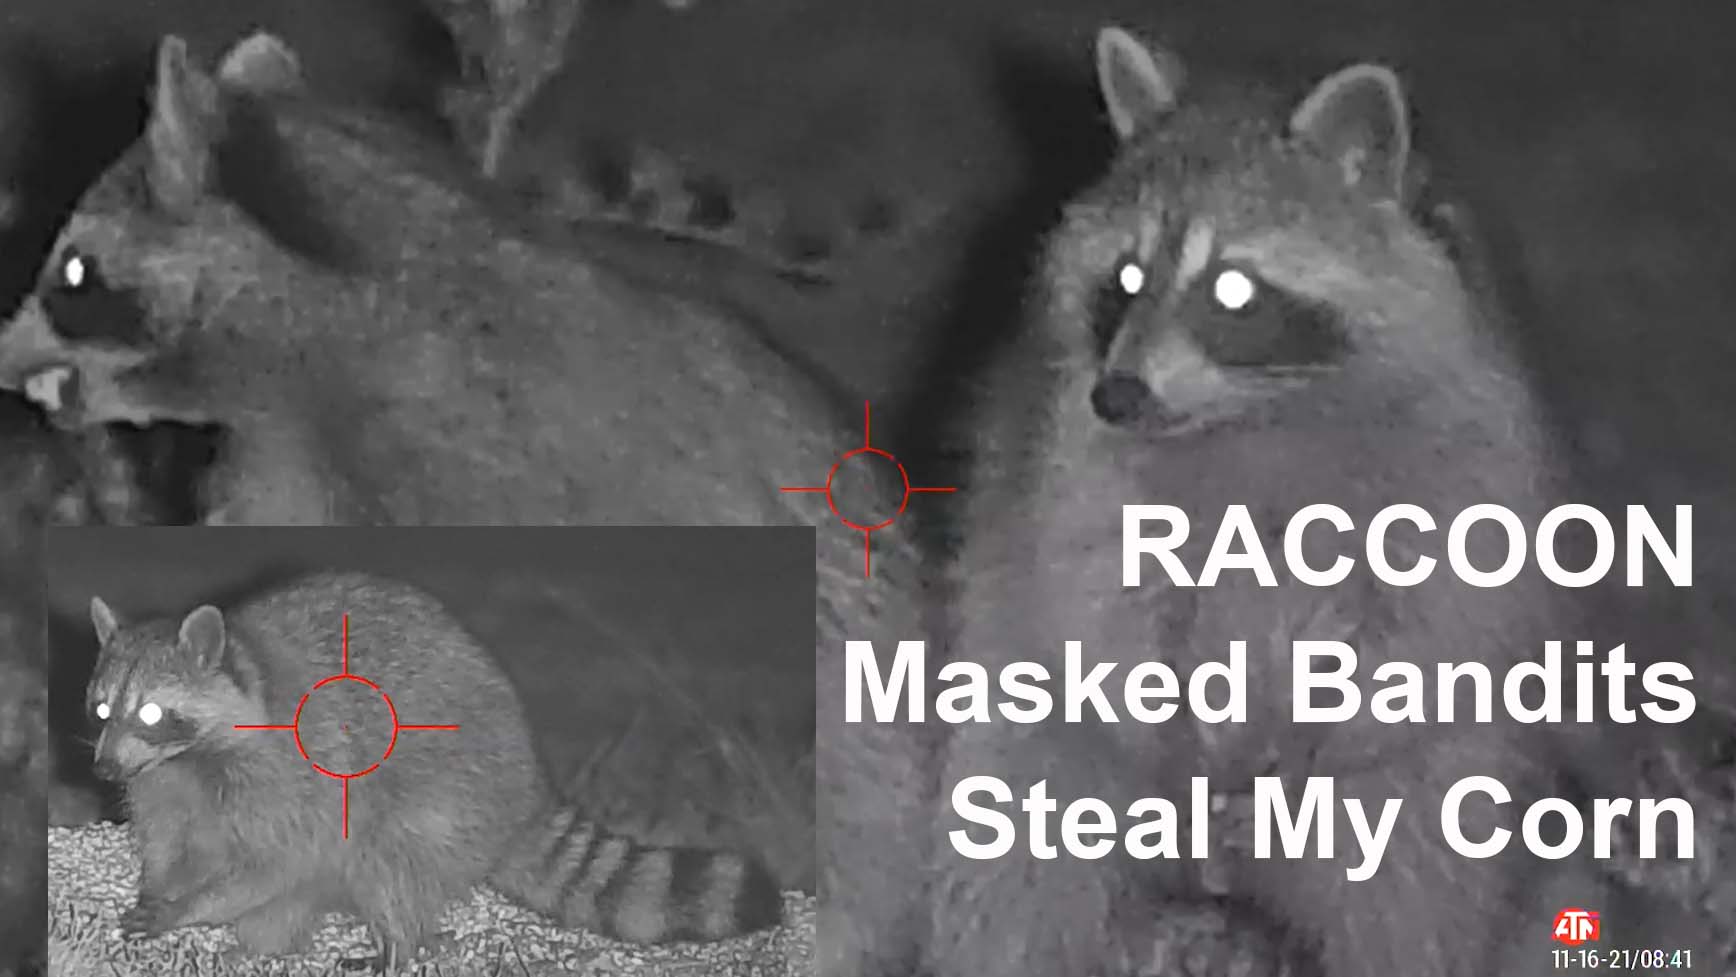 Raccoon Masked Bandits Steal My Corn